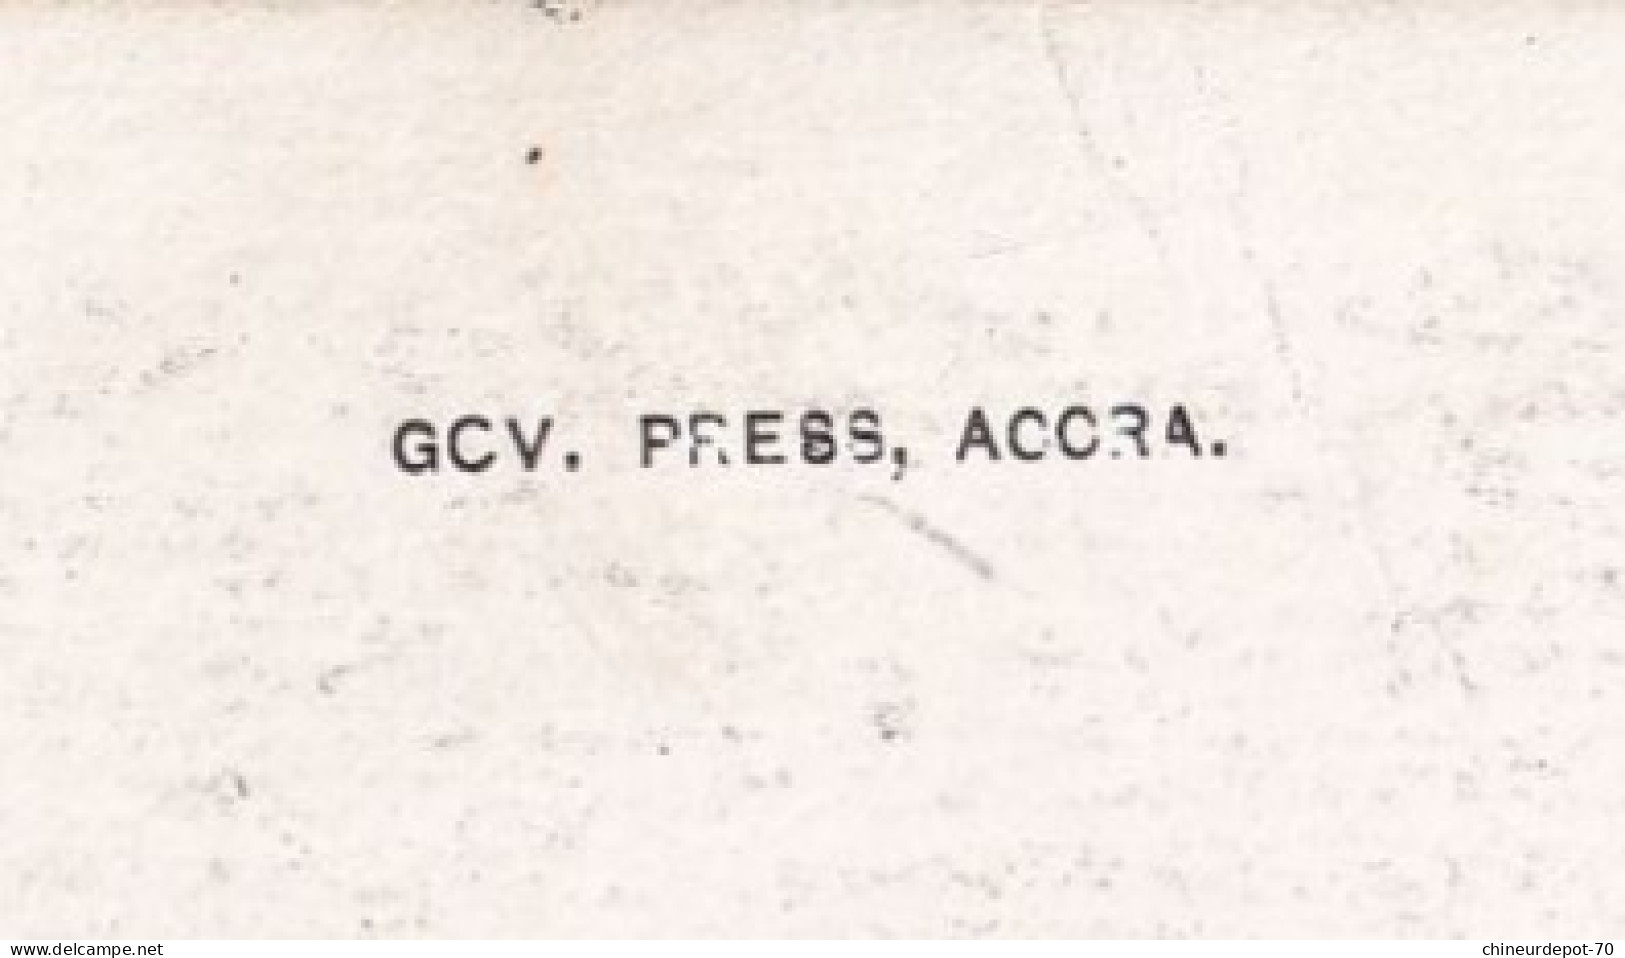 GCV PRESS ACCRA - Ghana - Gold Coast